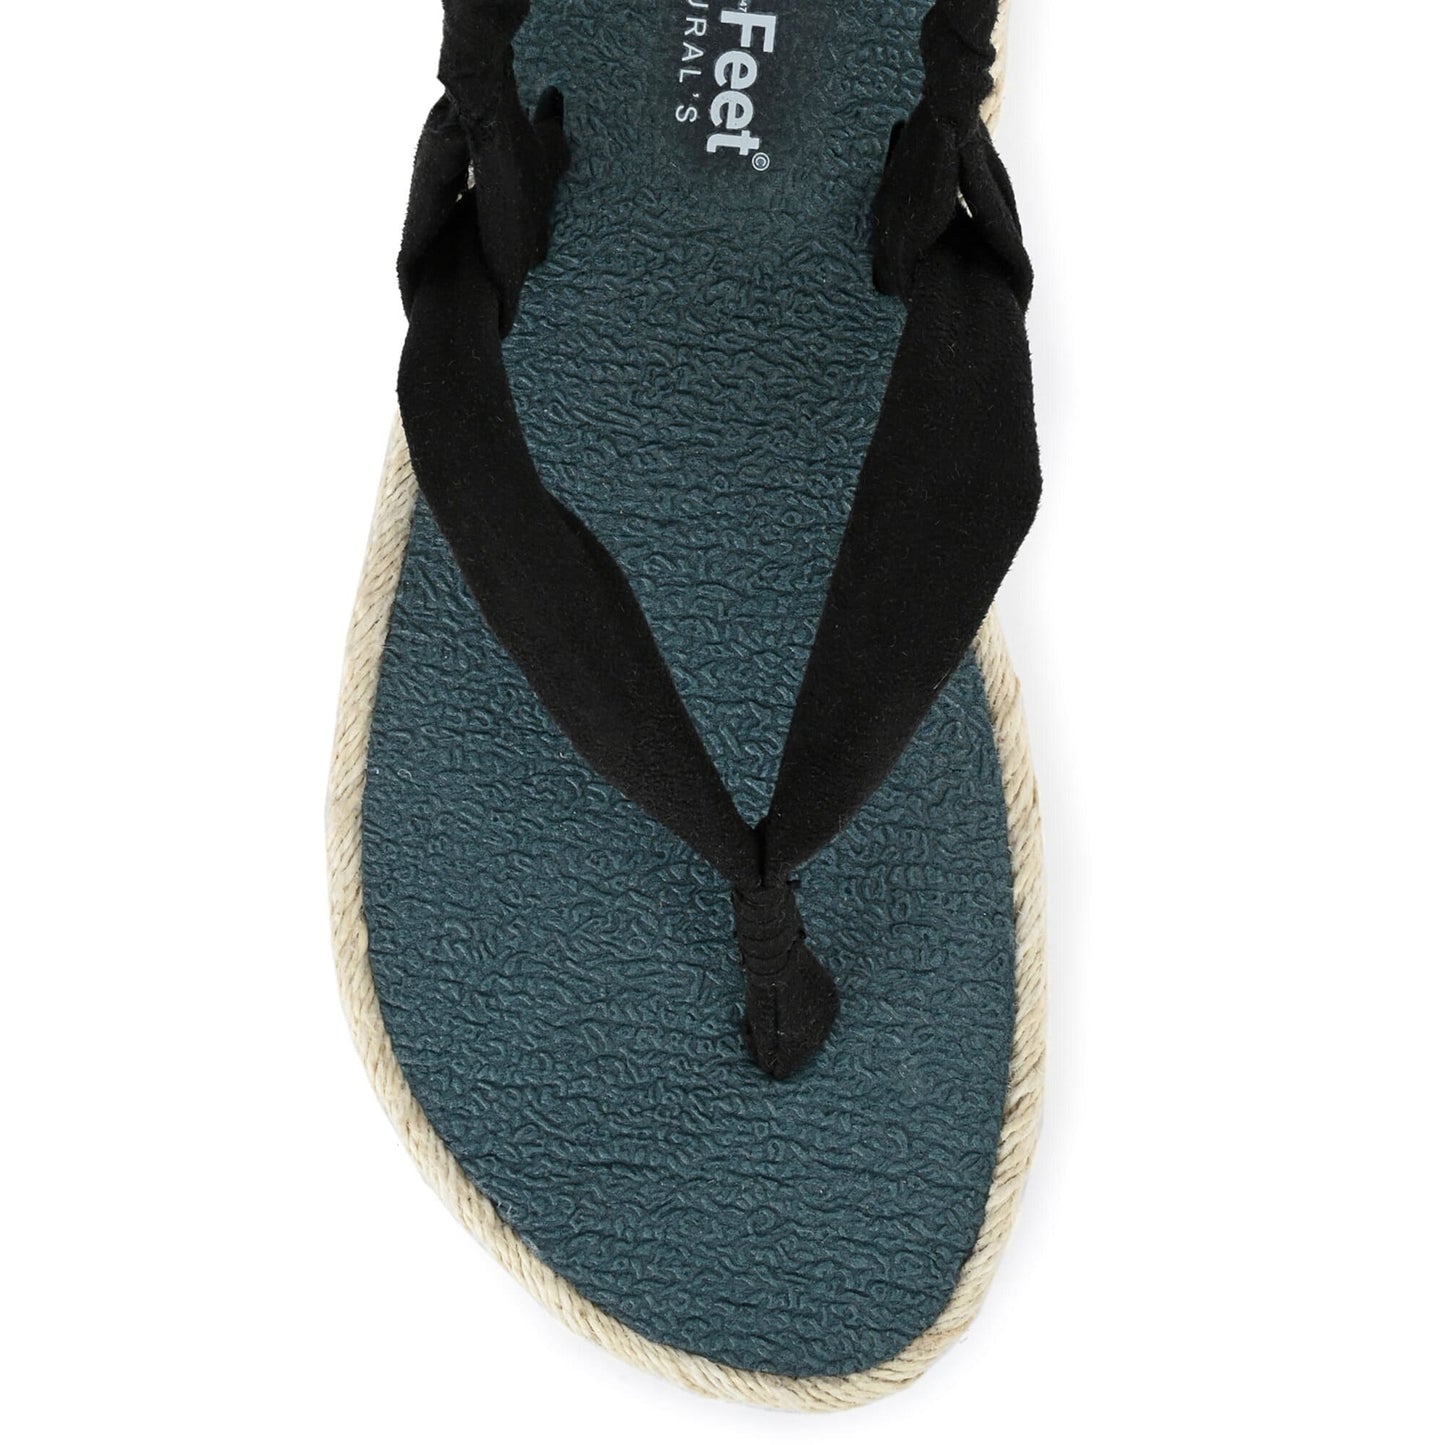 Alexa Black Yoga Mat Sandals for Women